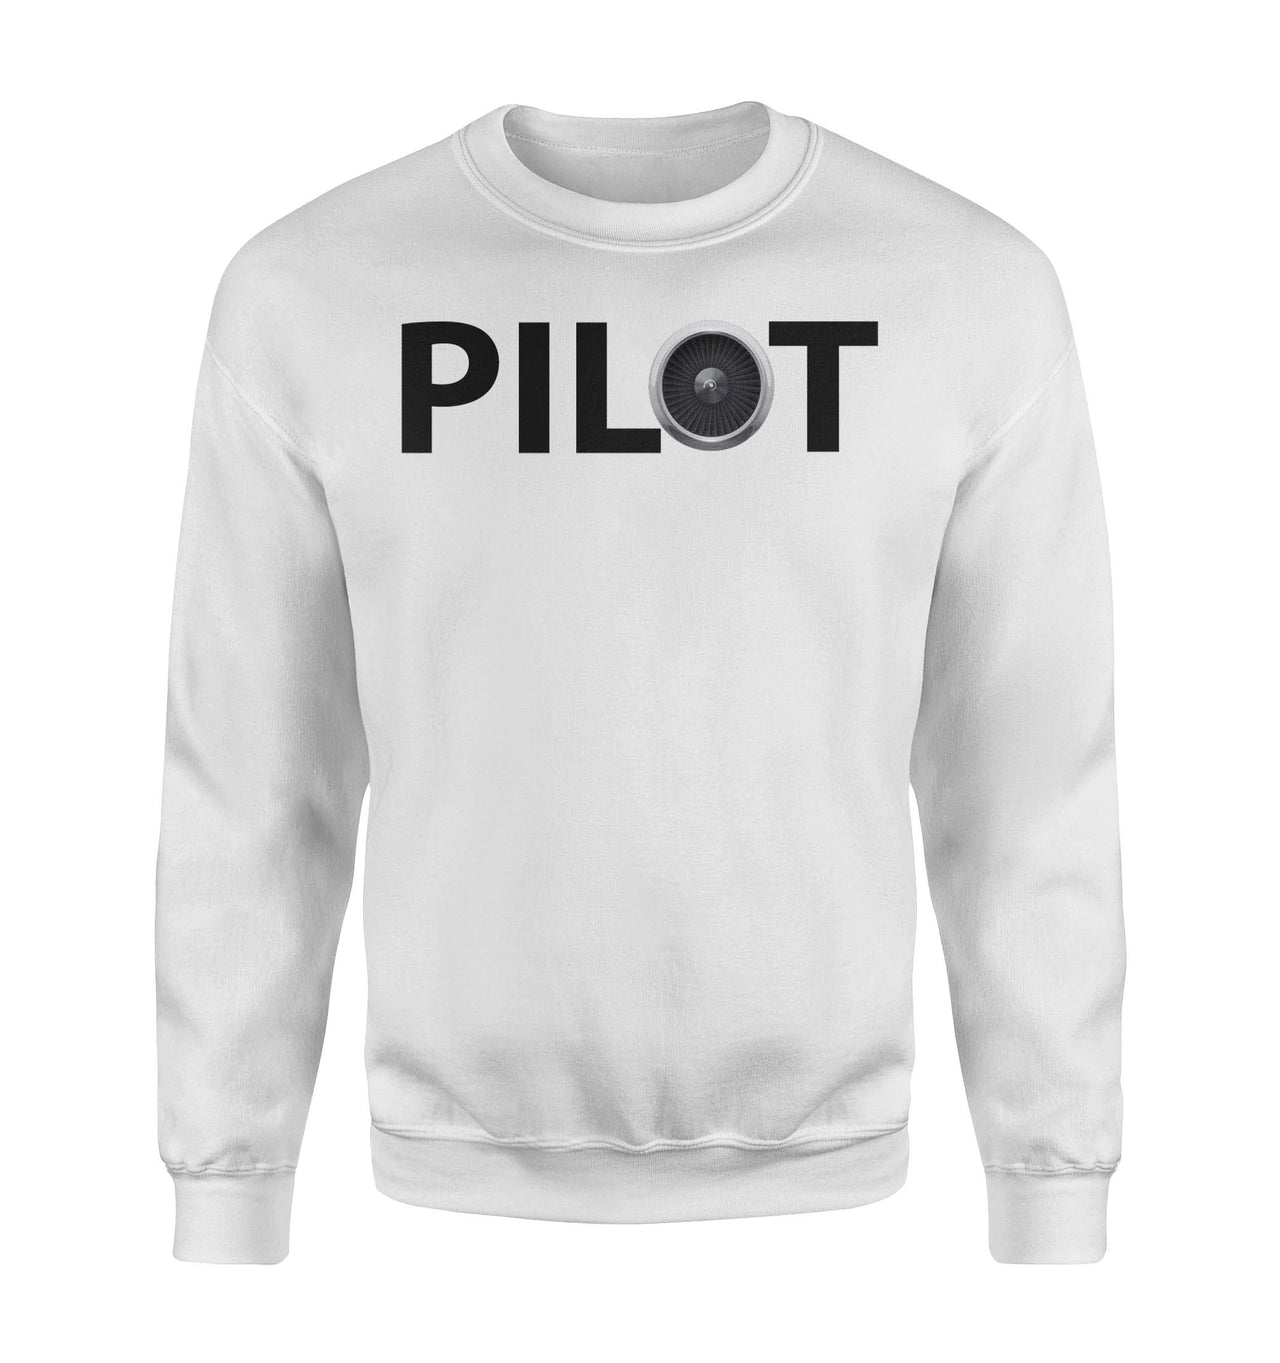 Pilot & Jet Engine Designed Sweatshirts